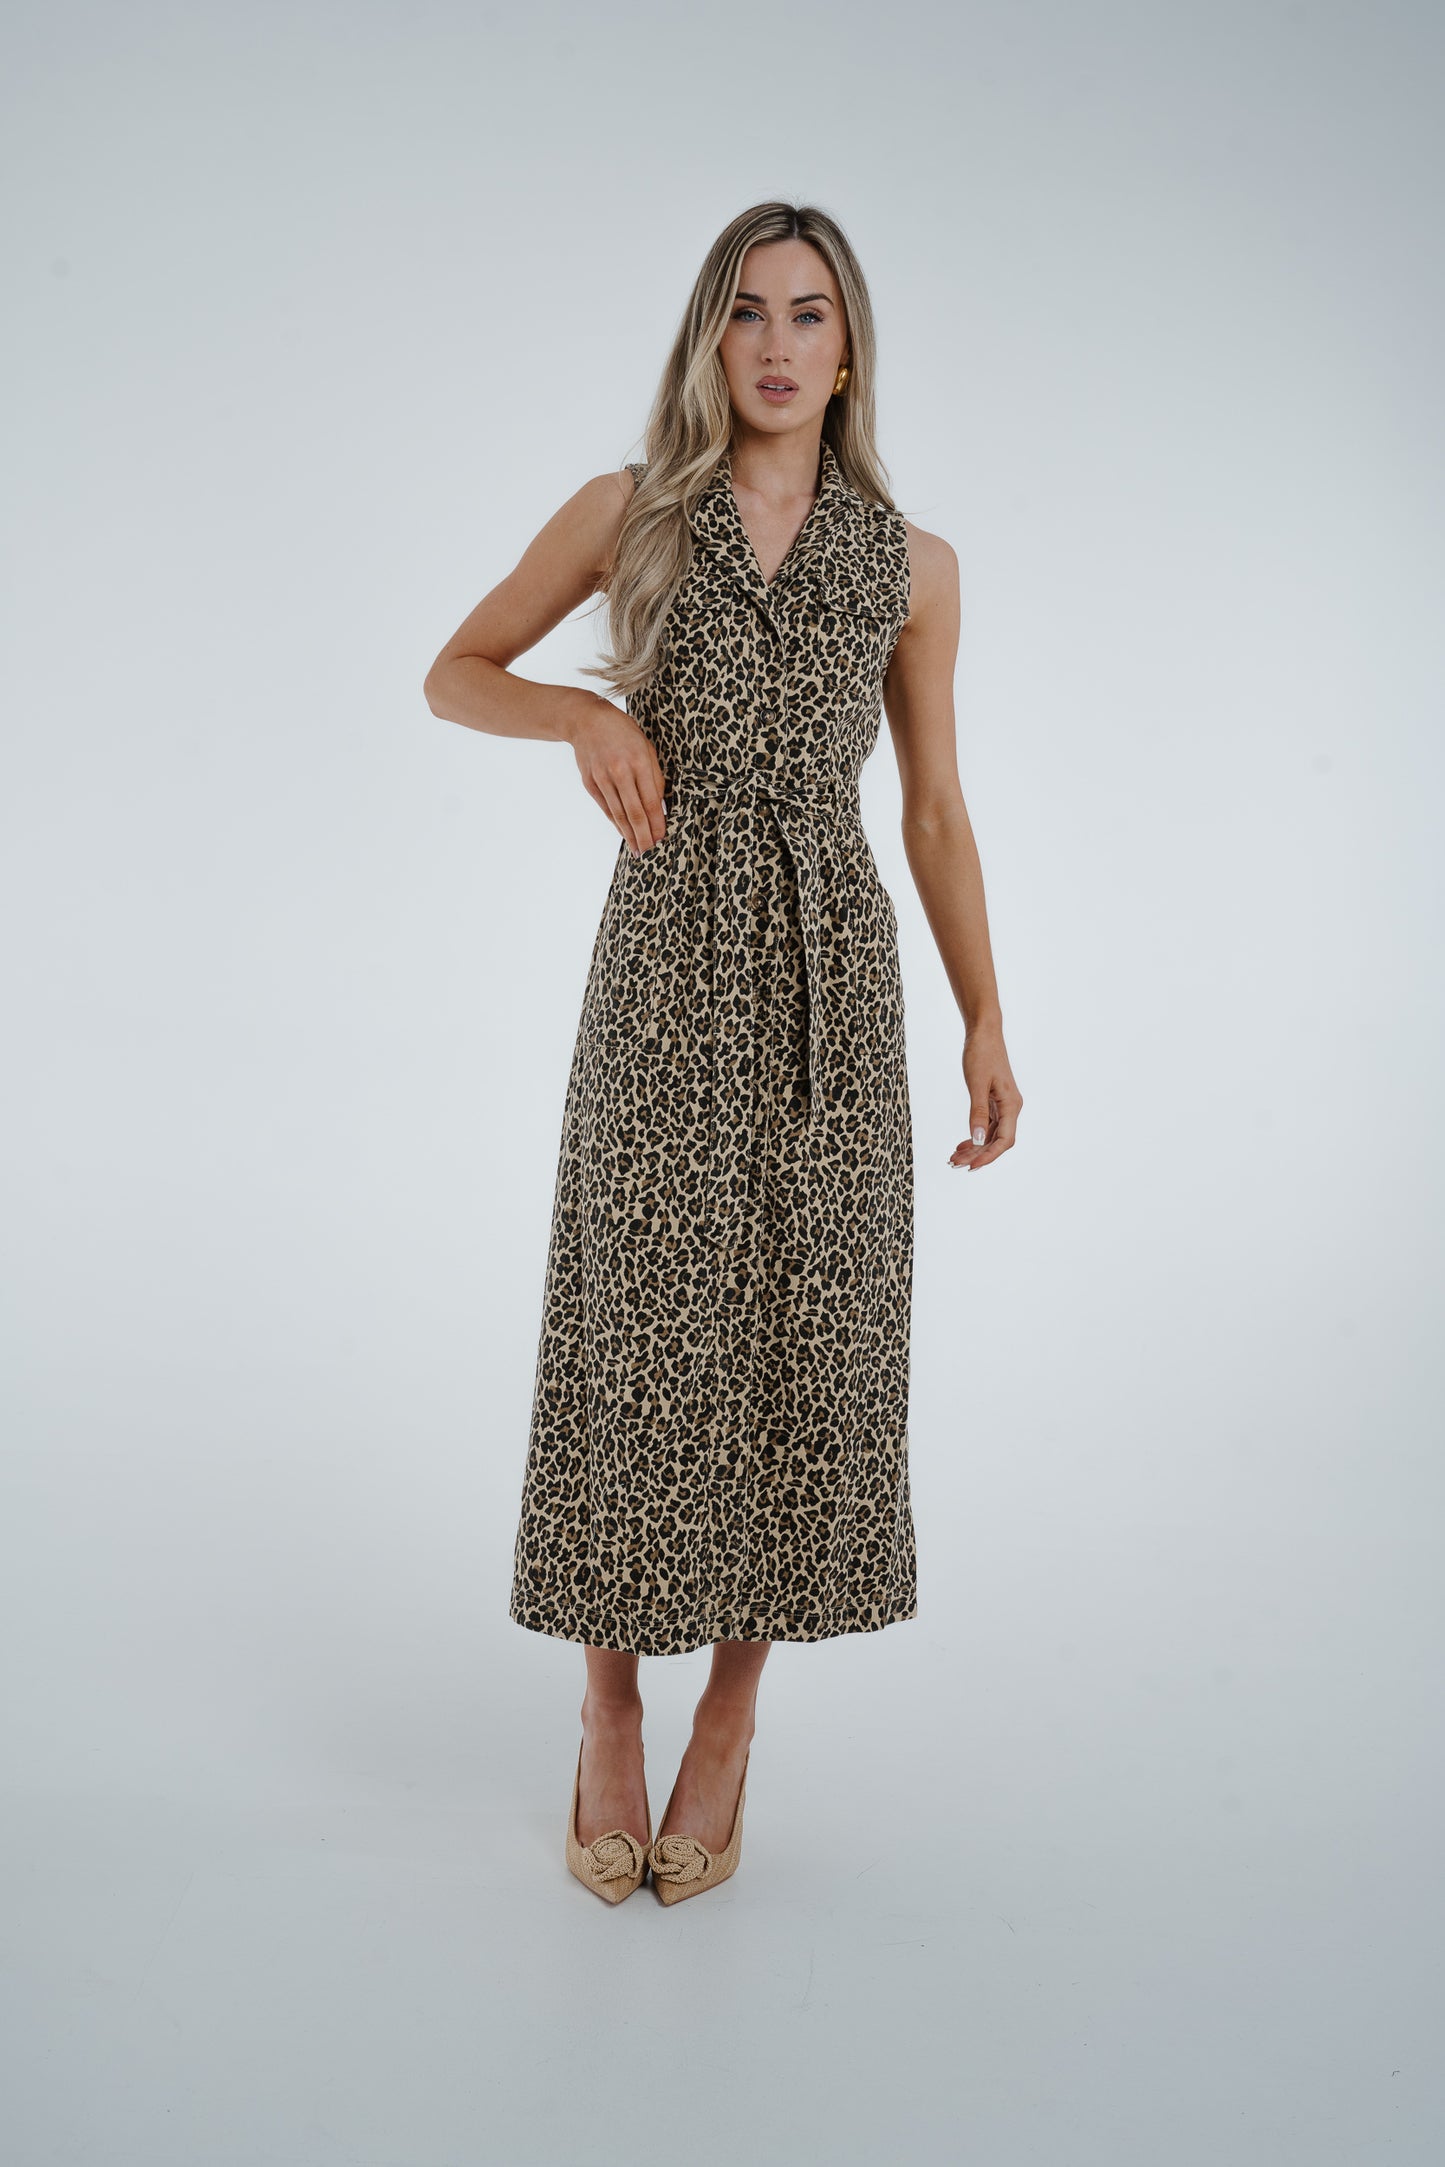 Cora Sleeveless Dress In Leopard Print